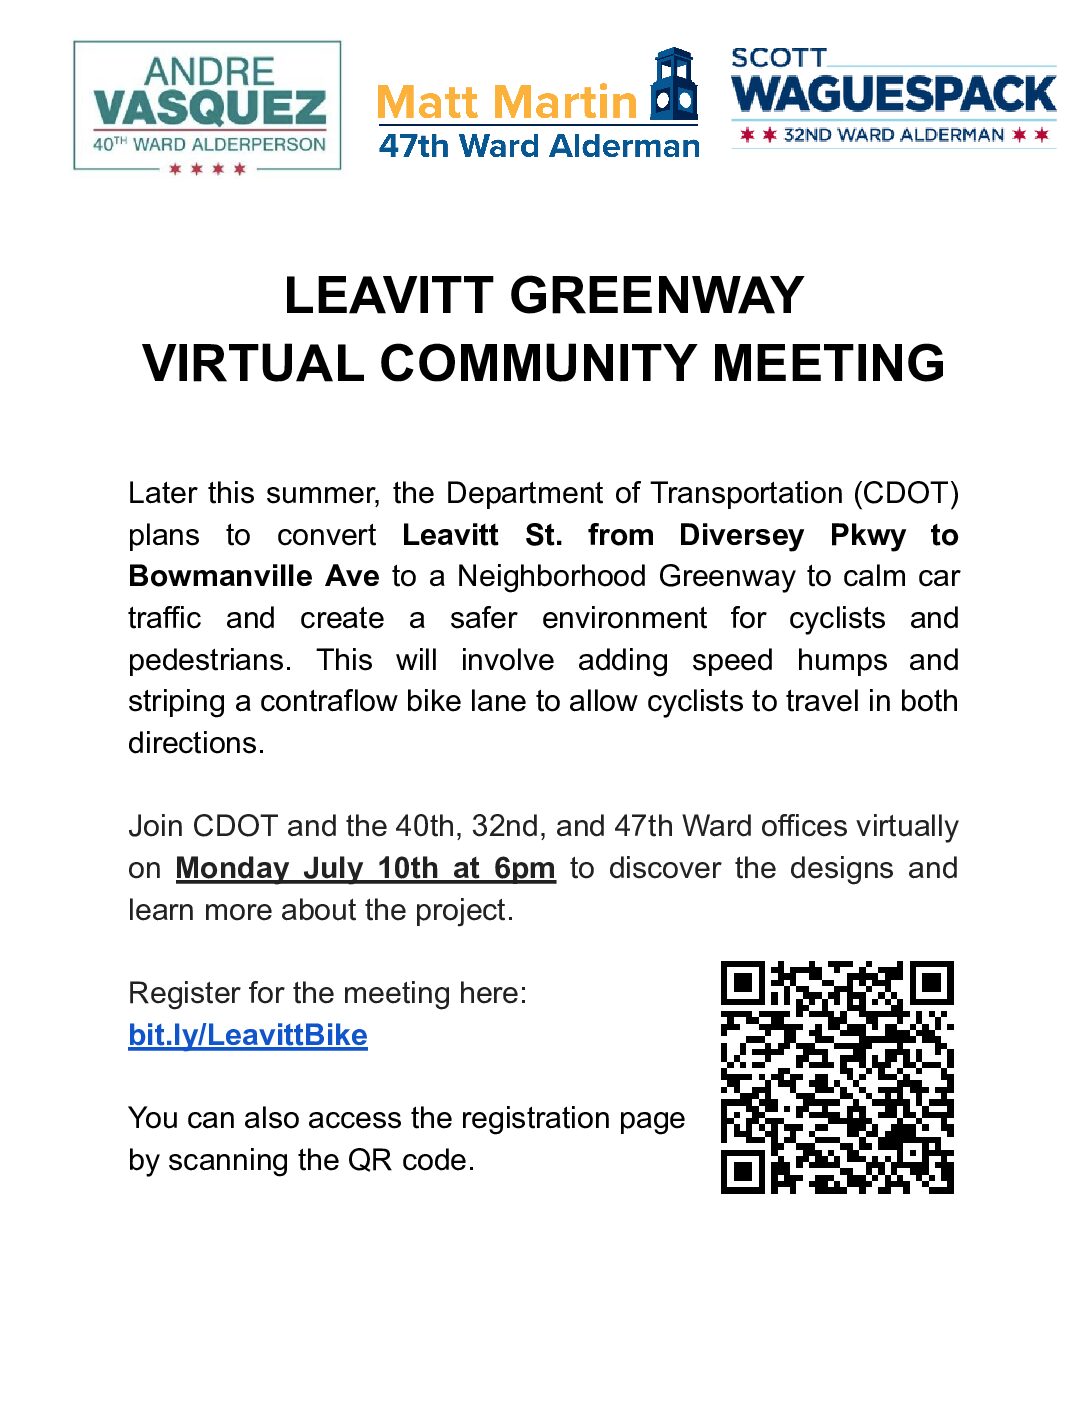 Leavitt Greenway Virtual Community Meeting